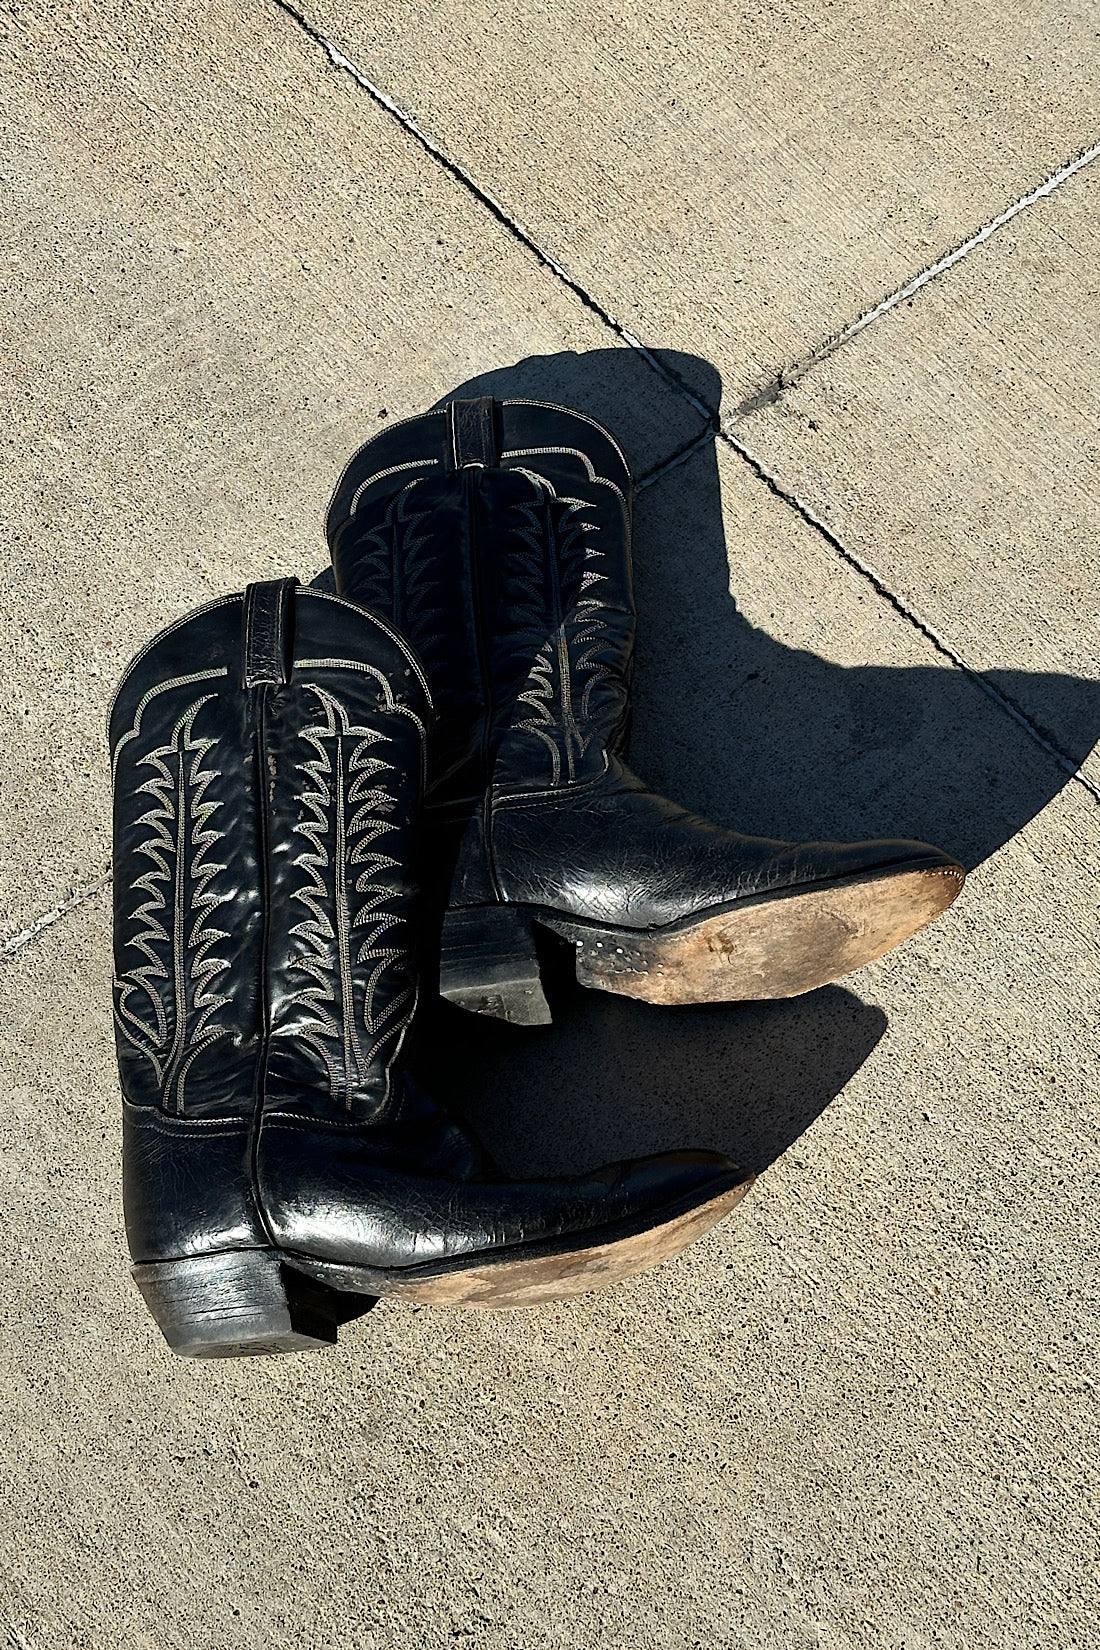 Vintage Tony Lama Men's Size 8 Boots